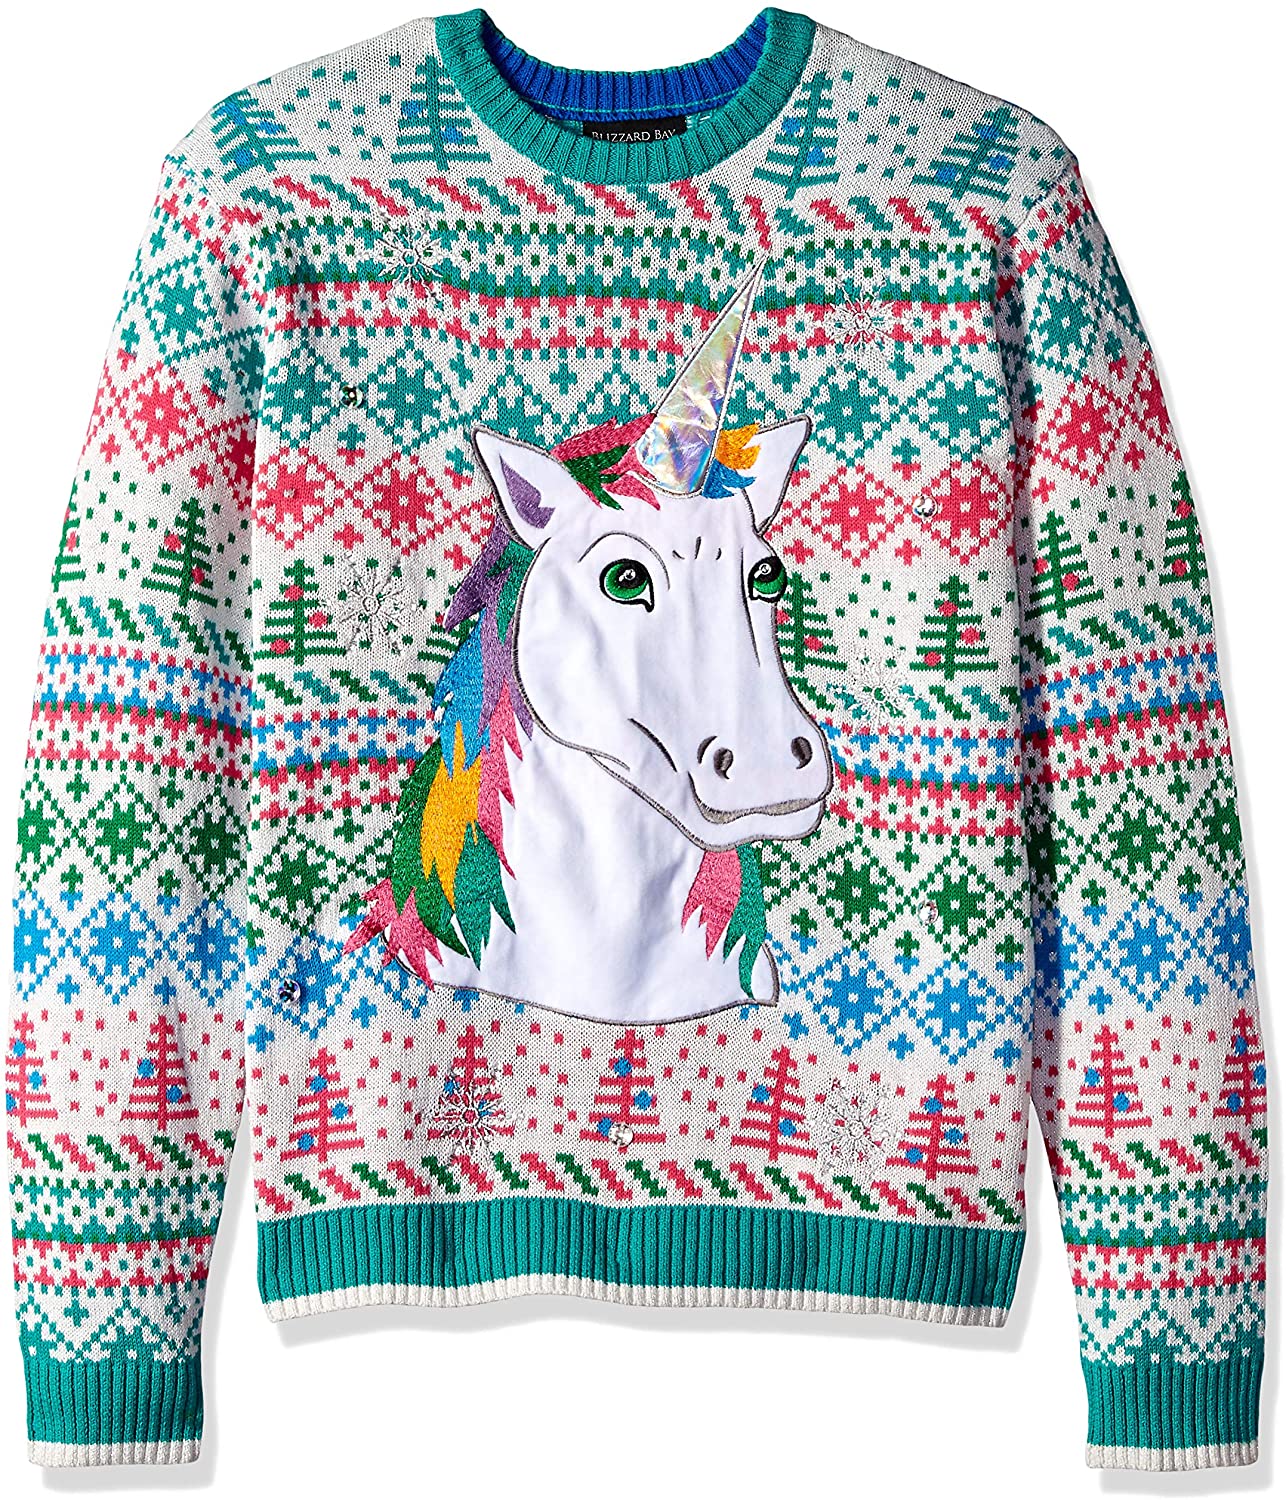 vernieuwen smaak congestie Blizzard Bay Men's Ugly Christmas Sweater Unicorn | eBay